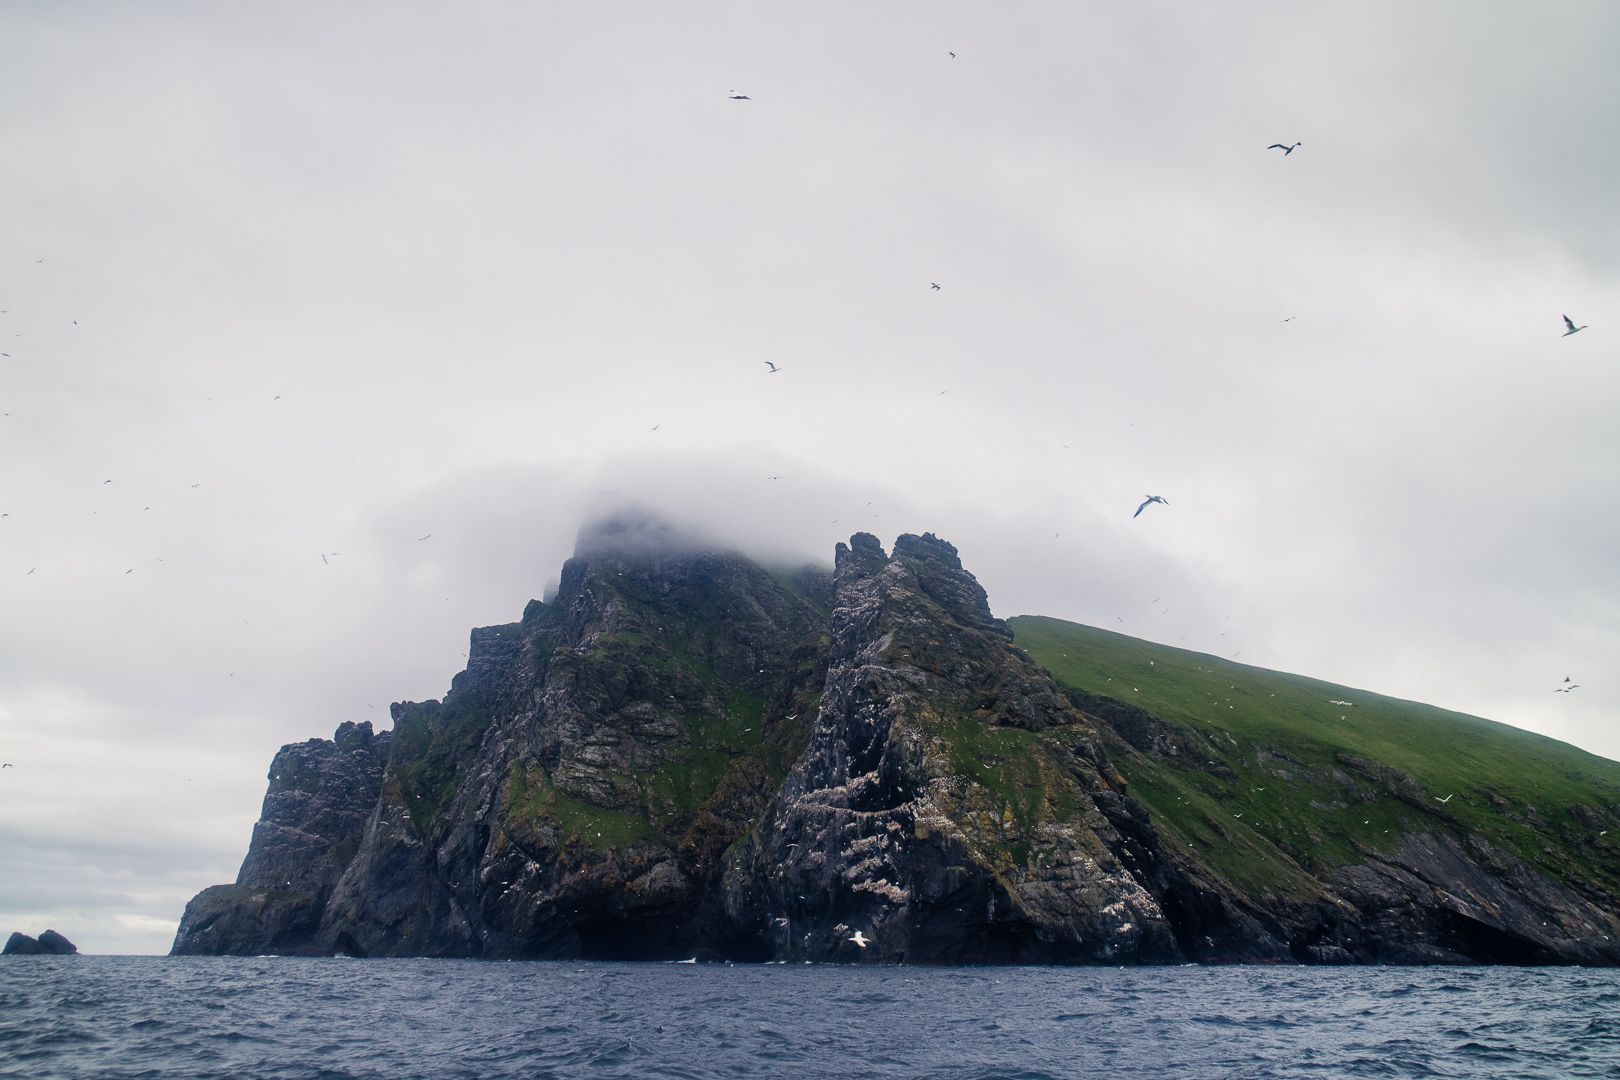 ‘Island on the Edge’ – St Kilda